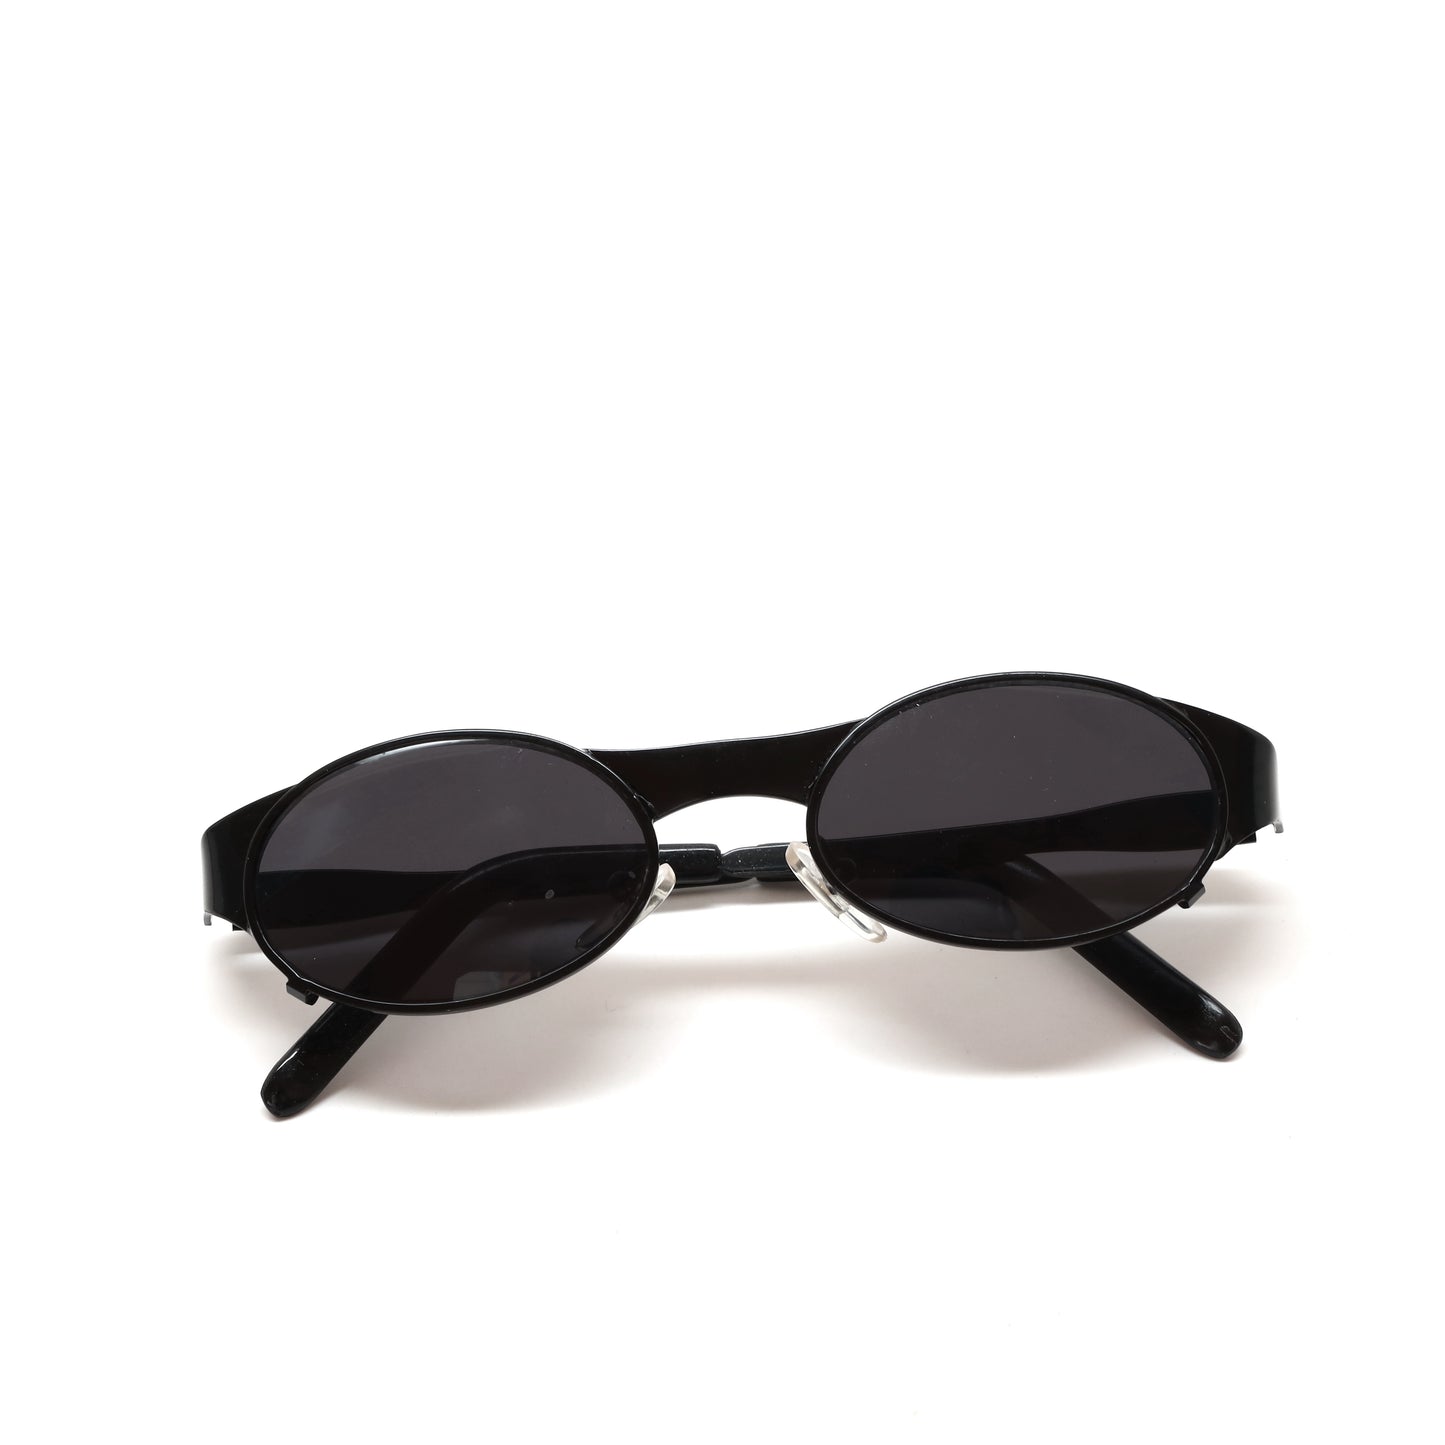 Vintage 90s New Old Stock Industrial Round Steel Frame Sunglasses - Black